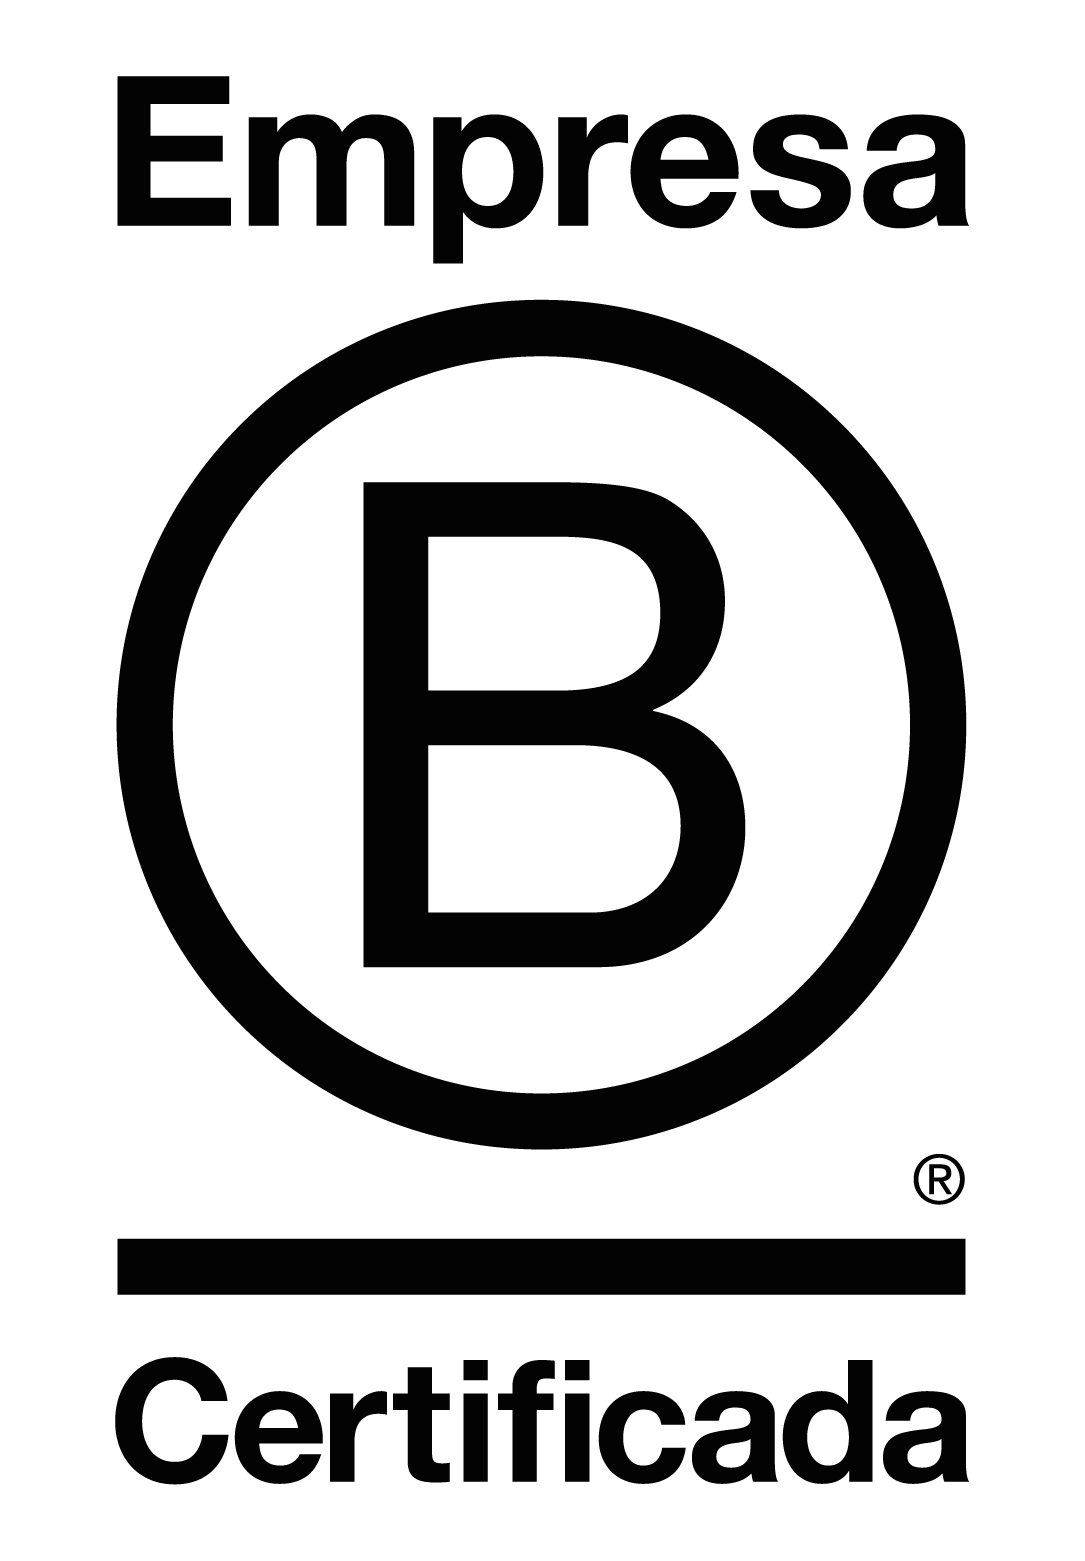 Logo Empresa B